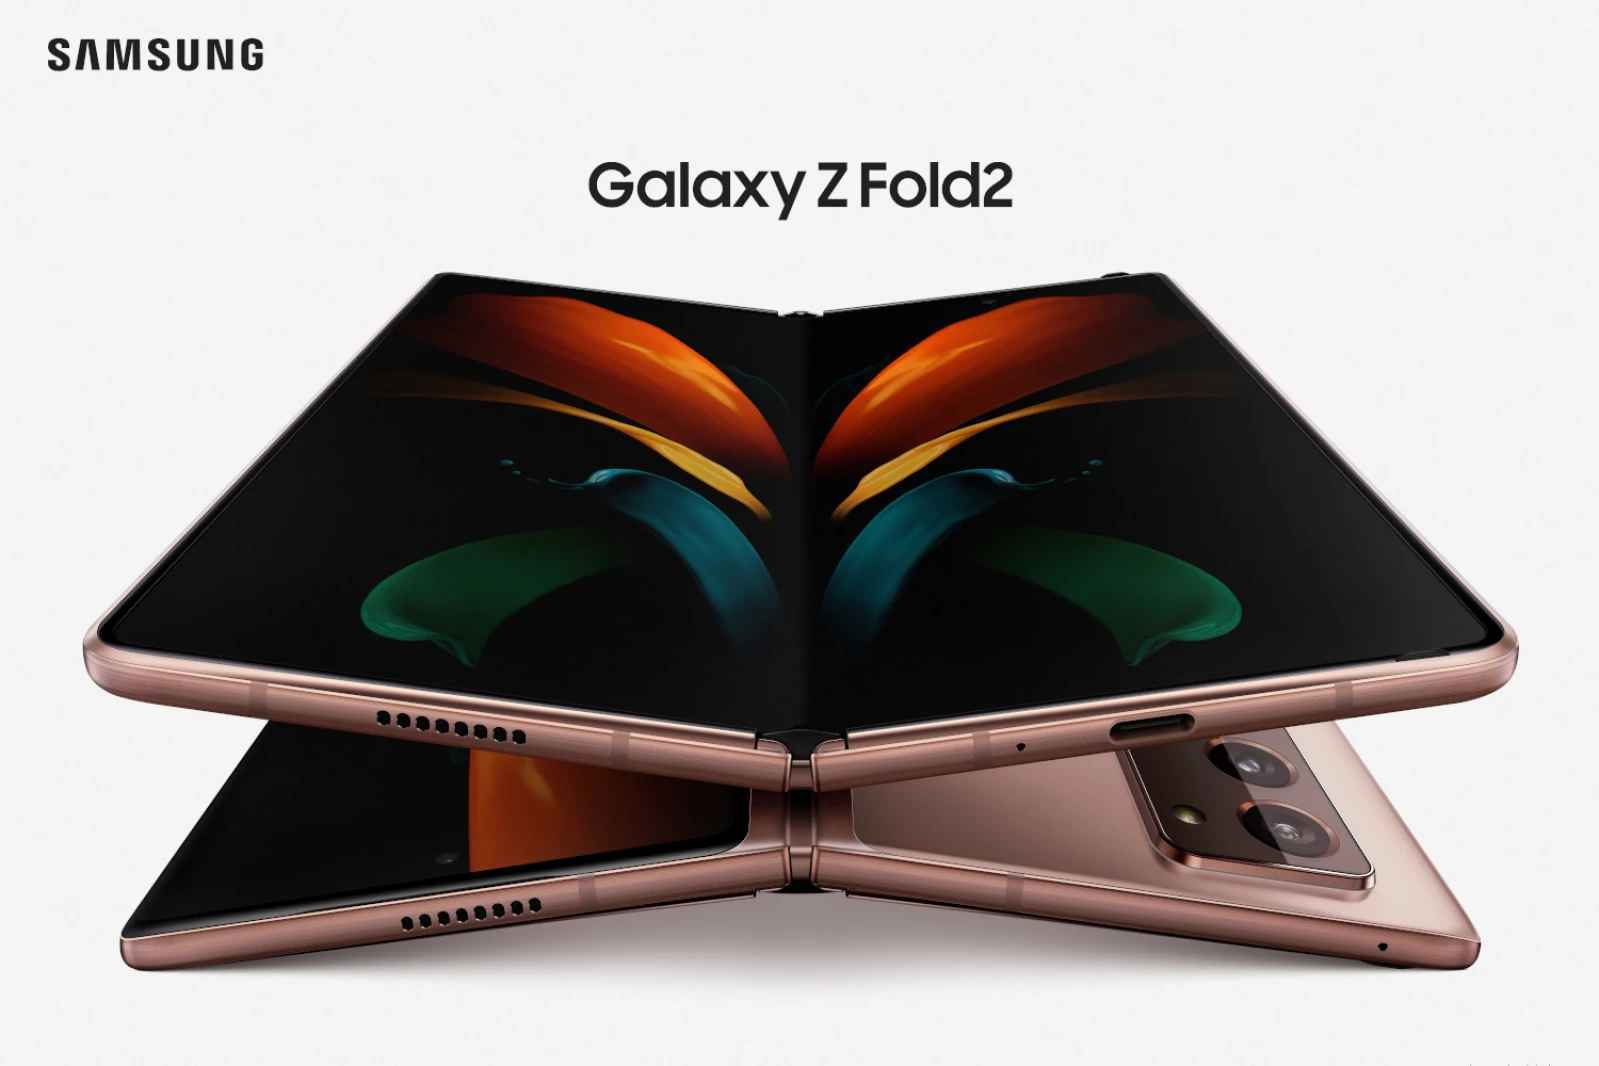 Samsung Galaxy Z Fold 2 - Big Huawei Mate X2 5G leak reveals key design details and specs